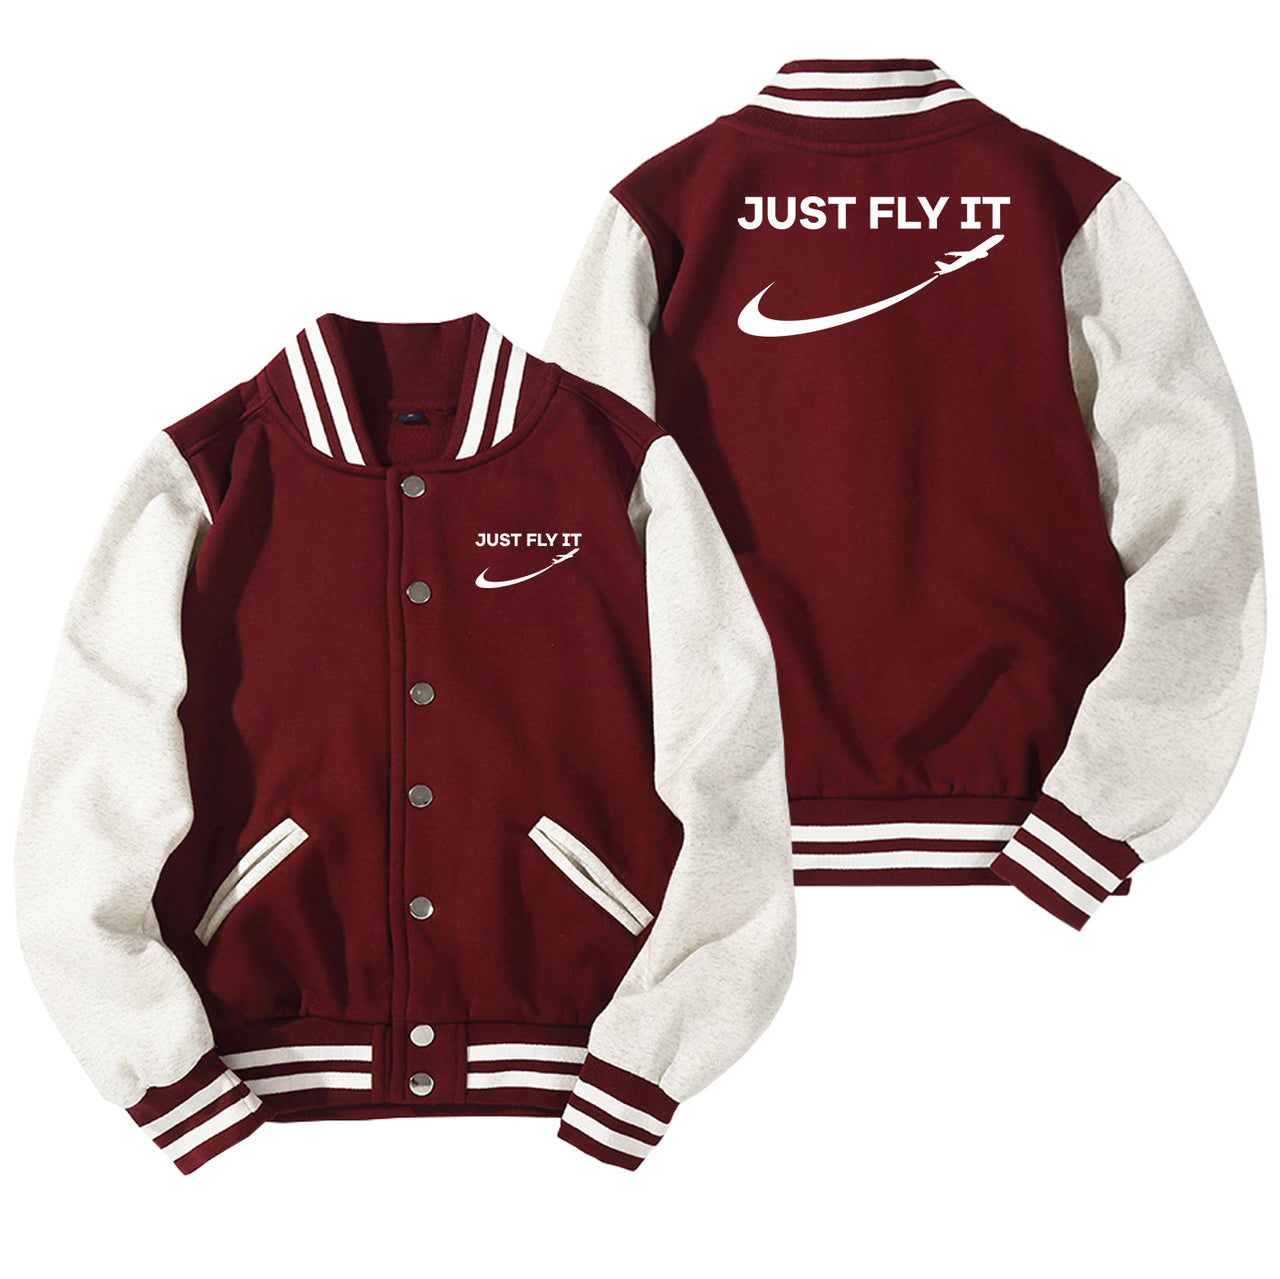 Just Fly It 2 Designed Baseball Style Jackets